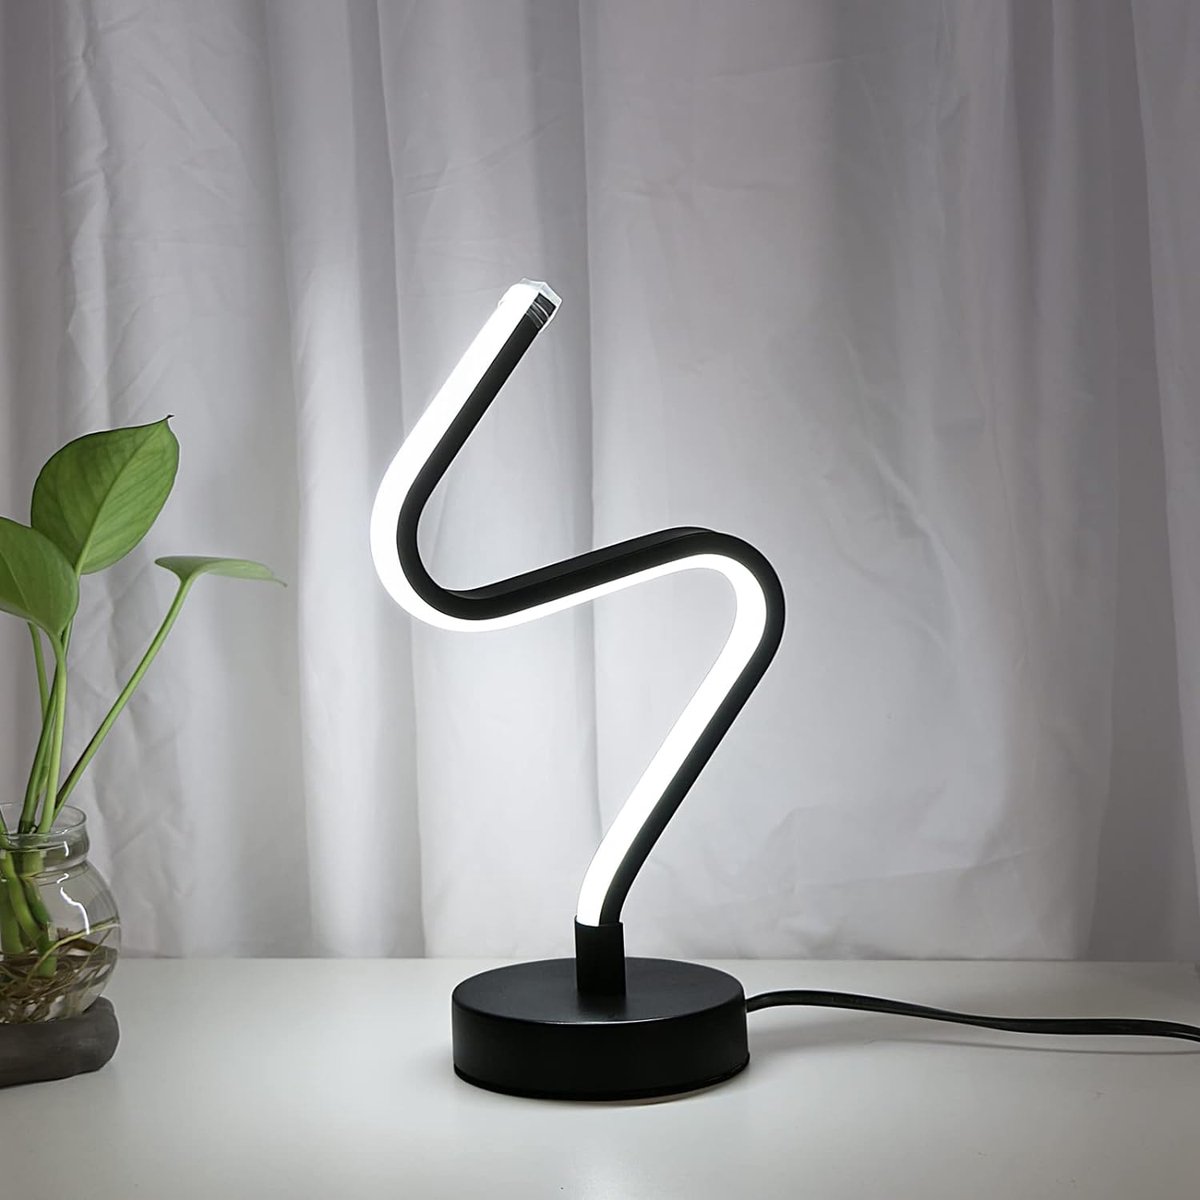 Goeco Tafellamp - 25cm - Klein - 12W - LED - Spiraal Acryl Bureaulamp - Met 1.5 m Kabel - 6500K - Koelwit Licht